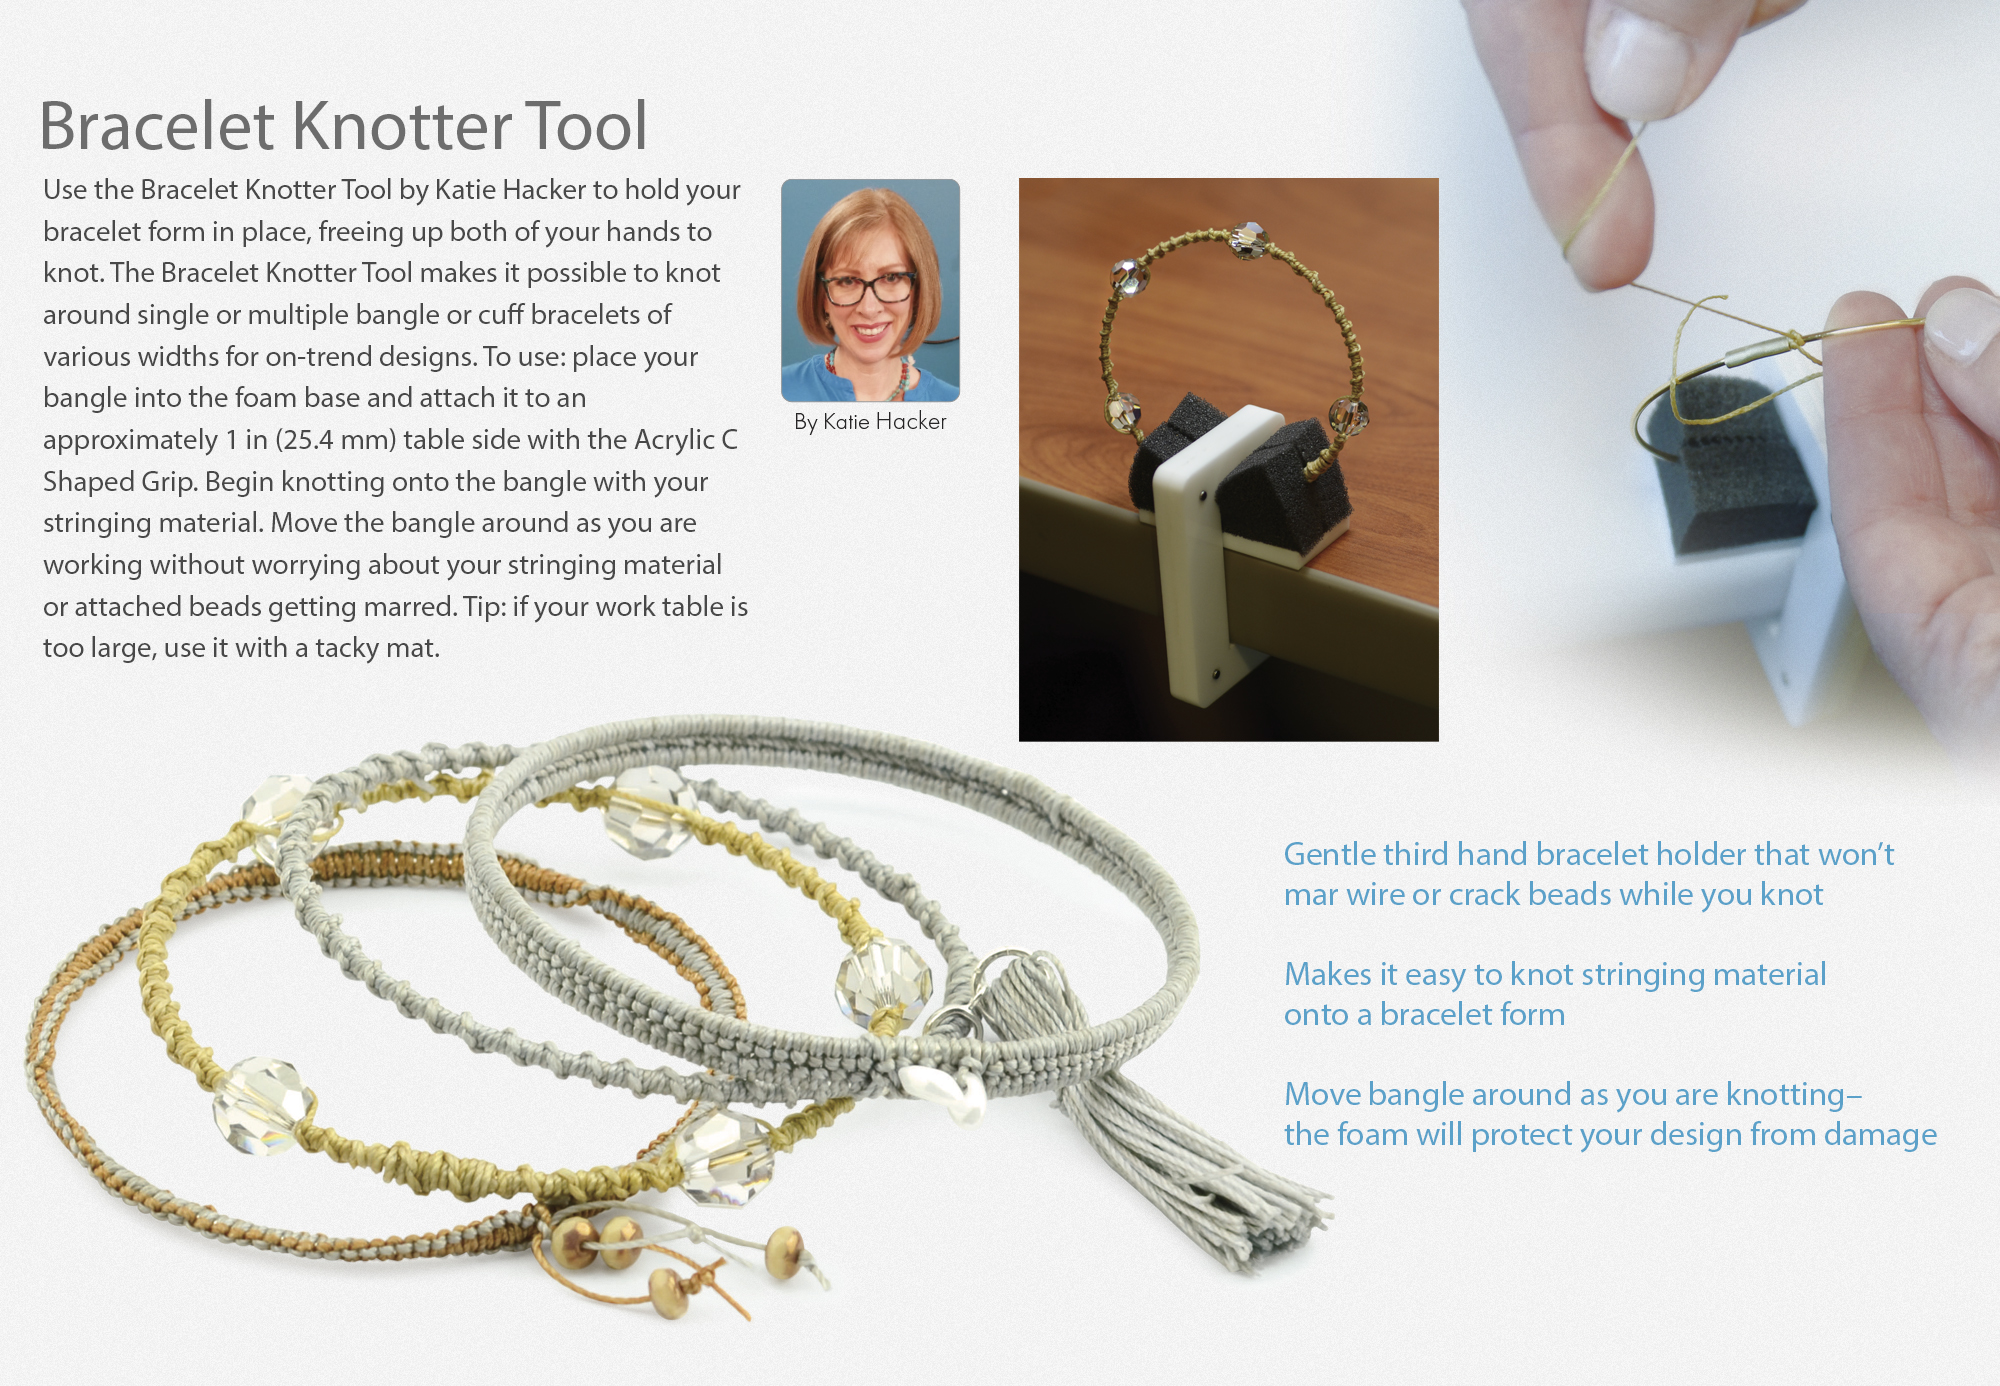 Knotter's Tools - No Needles